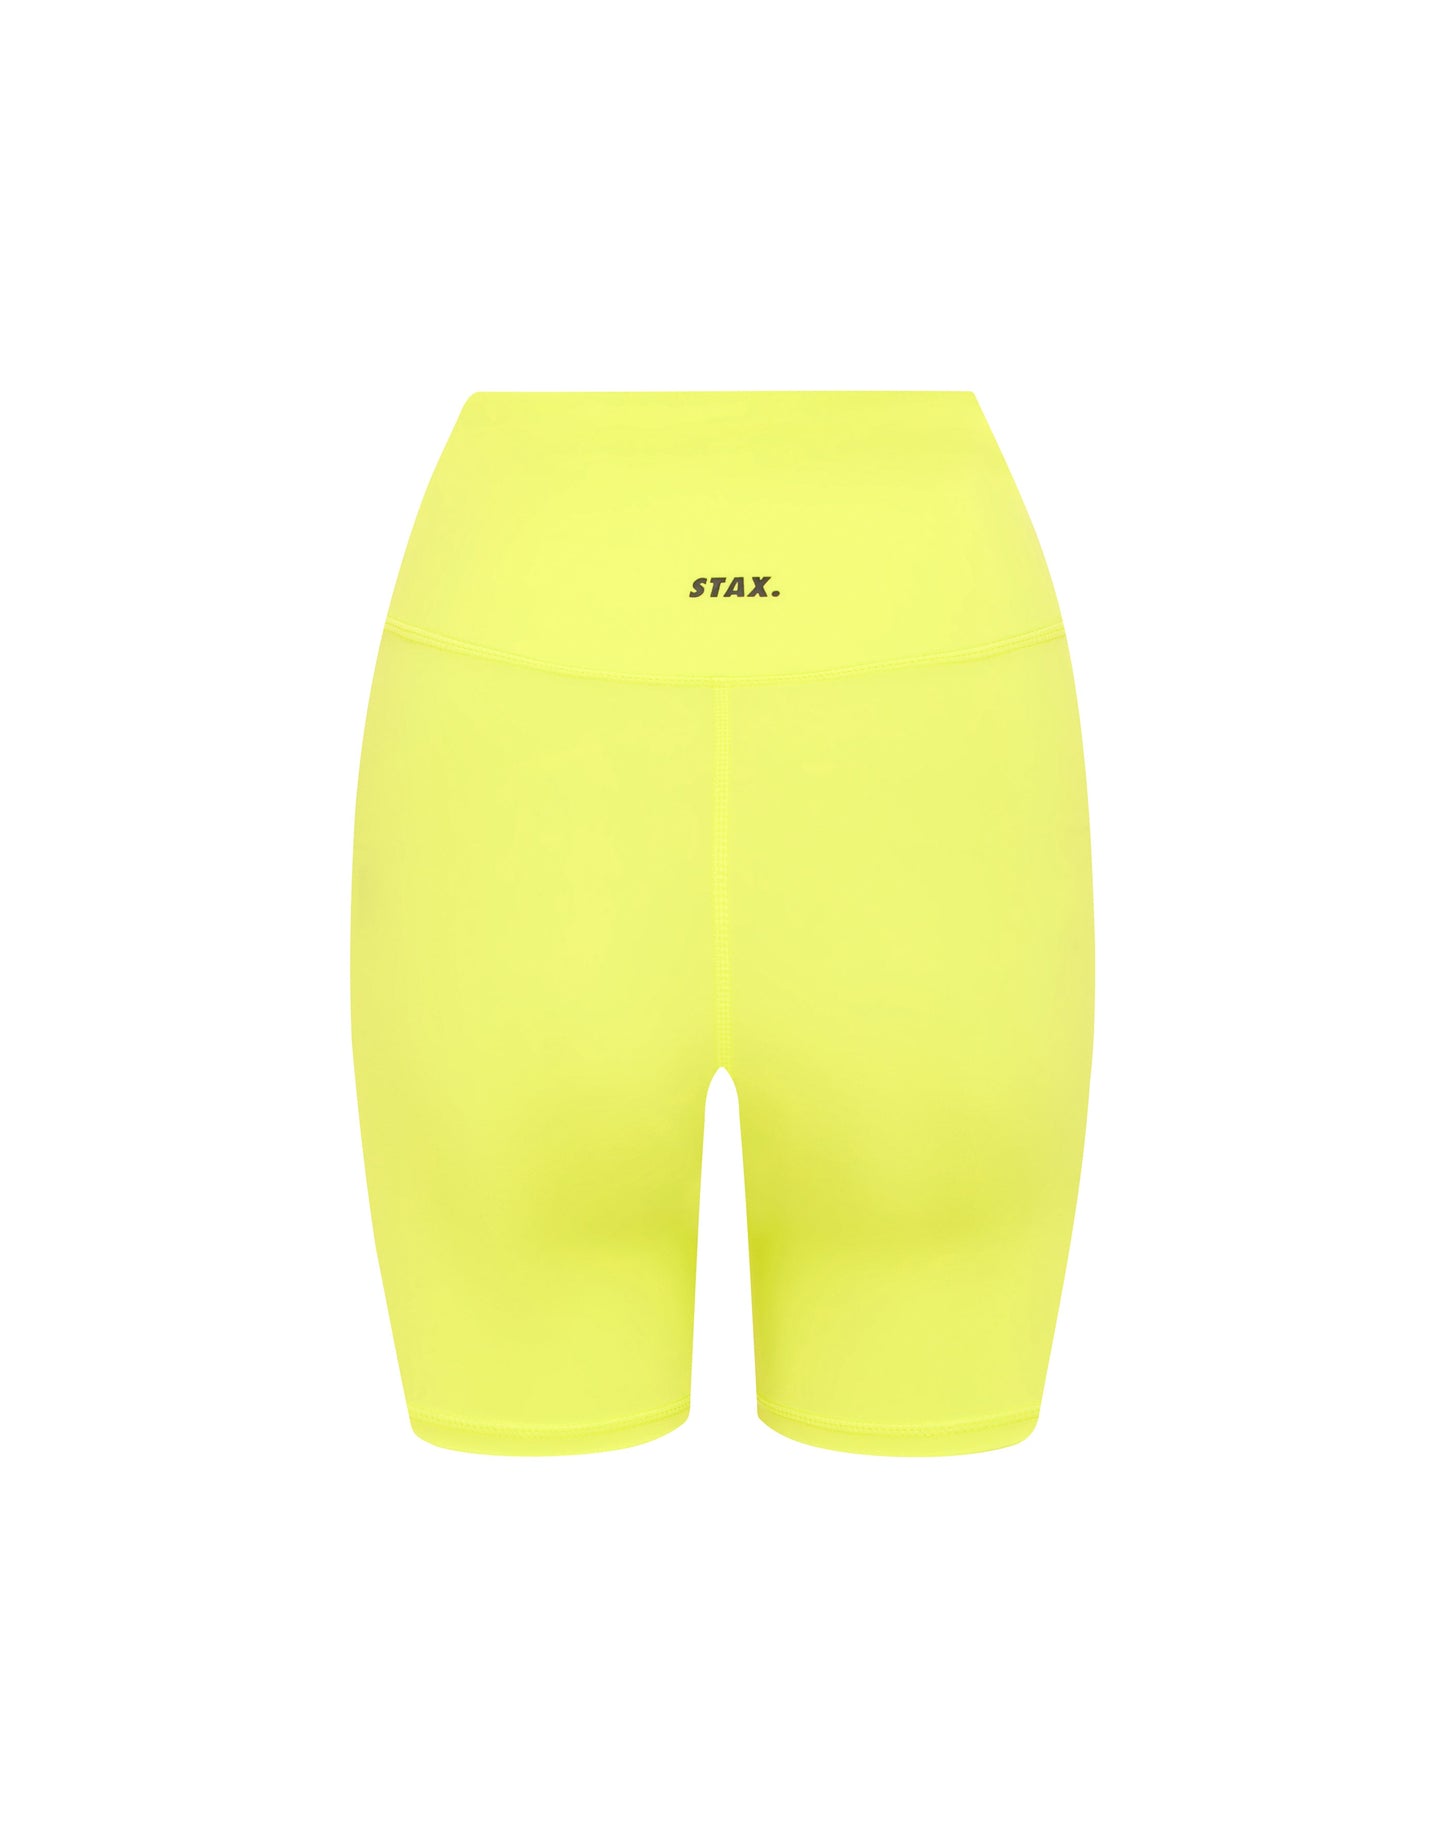 Summer 22 Midi Bike Shorts - Yellow